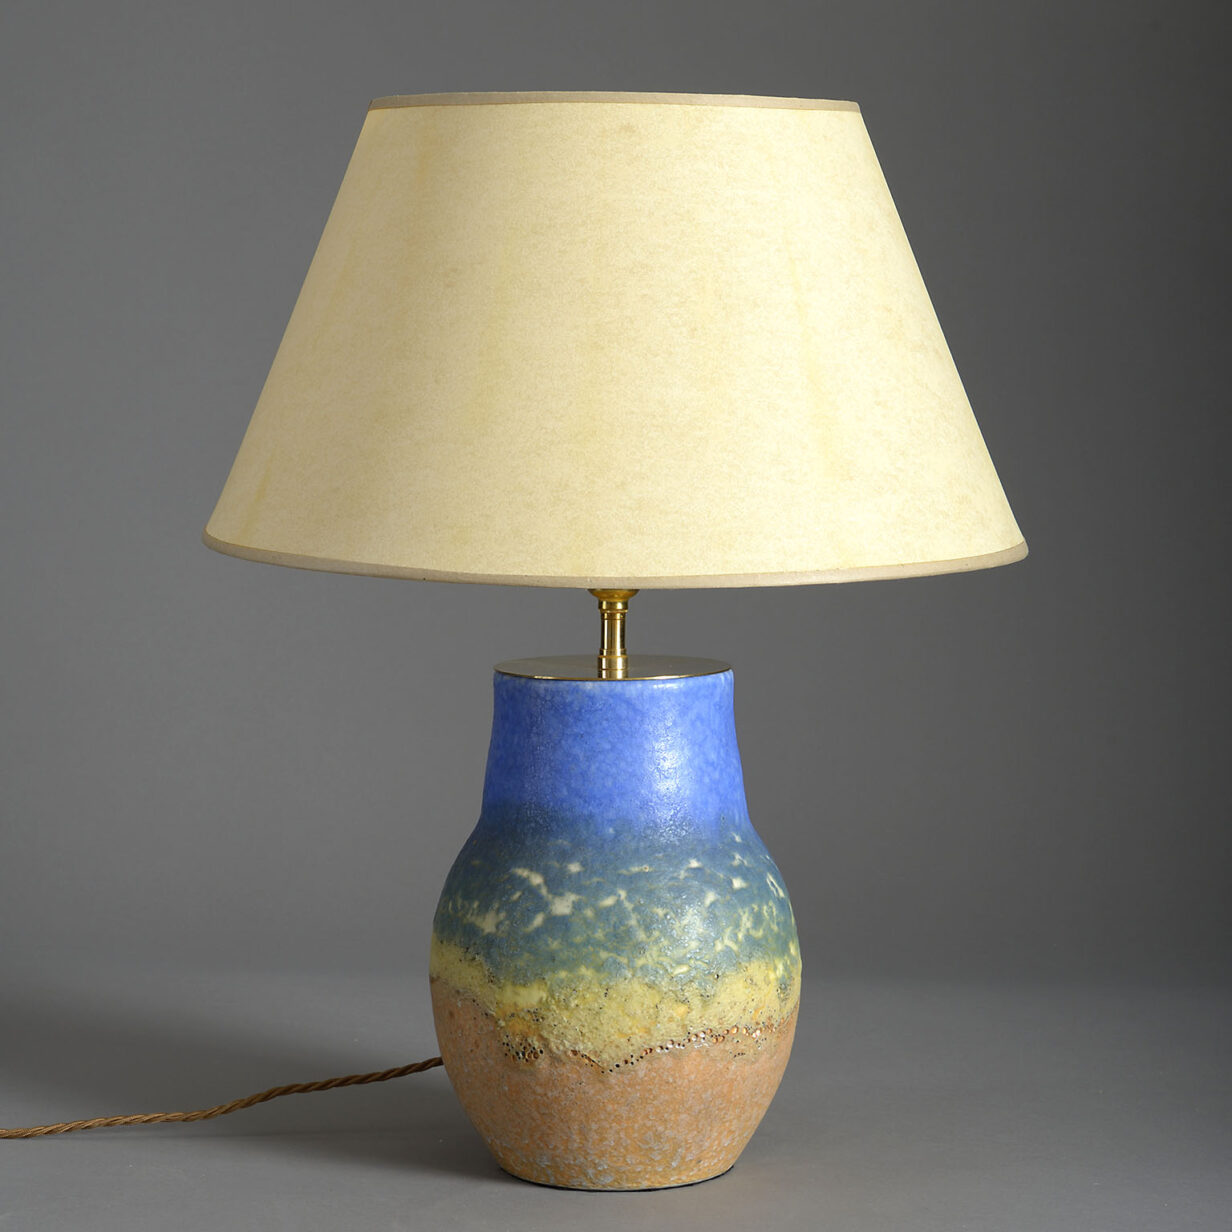 Art vase lamp